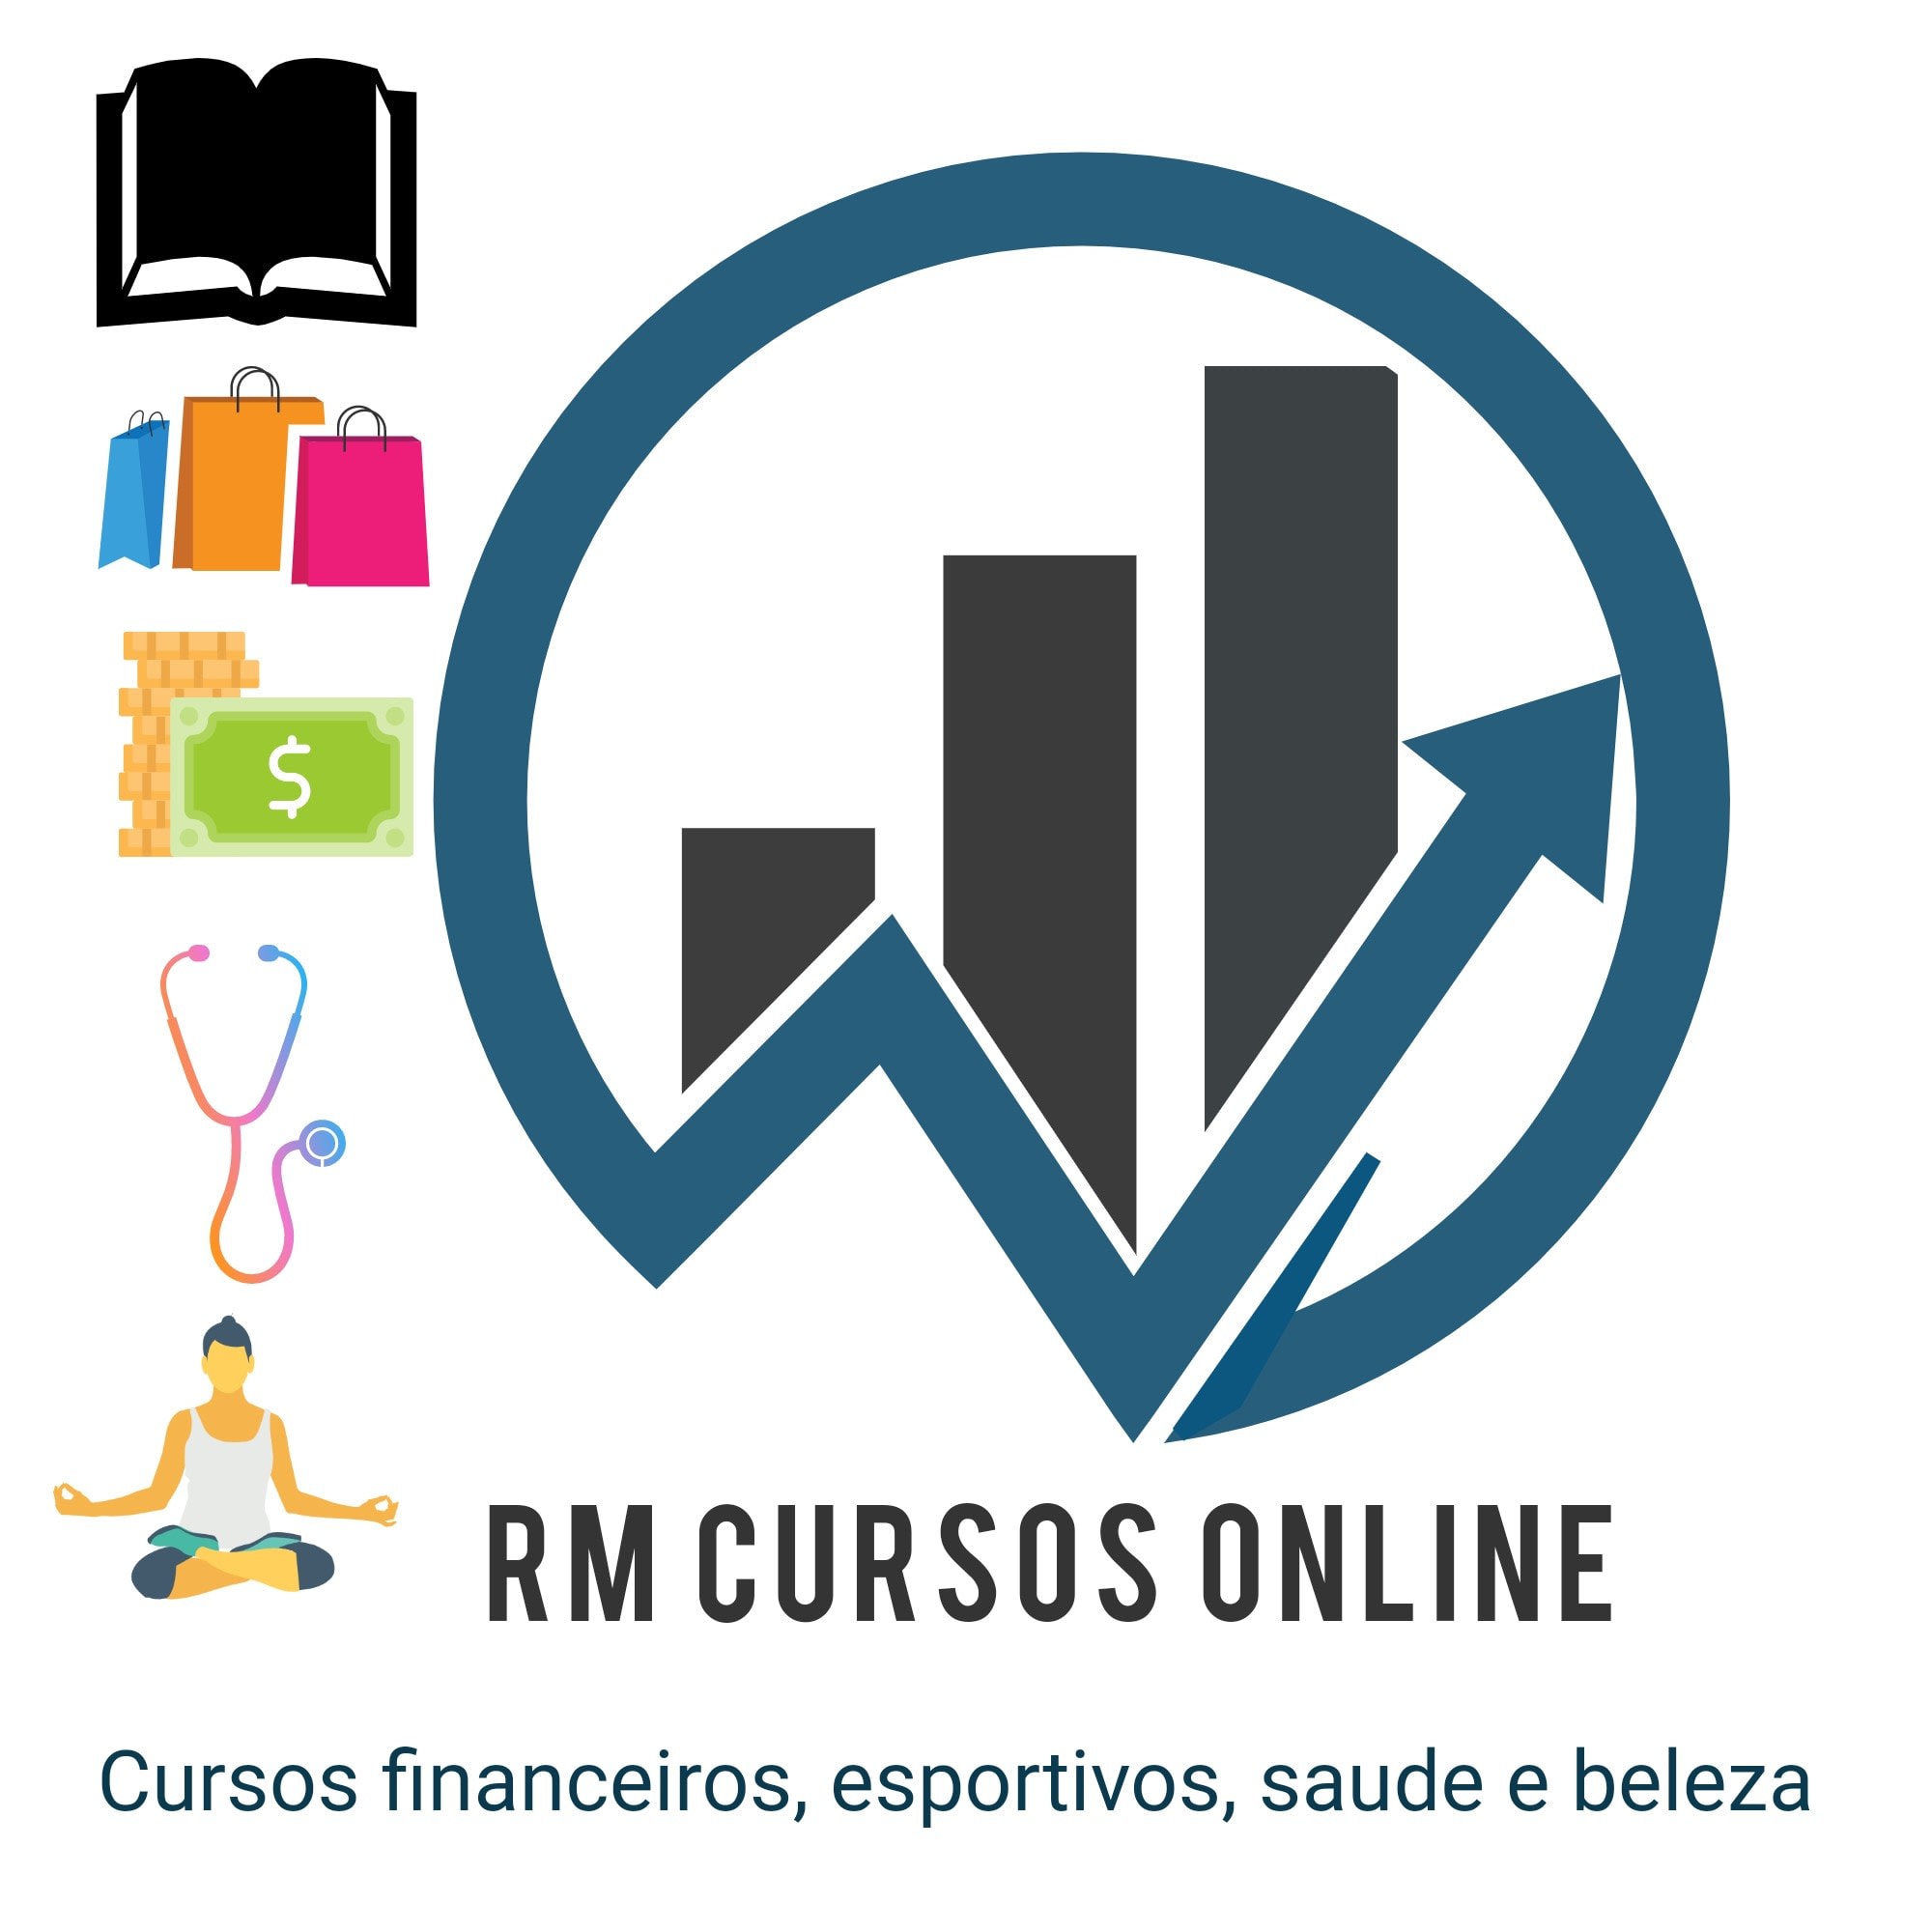 RM Cursos Online